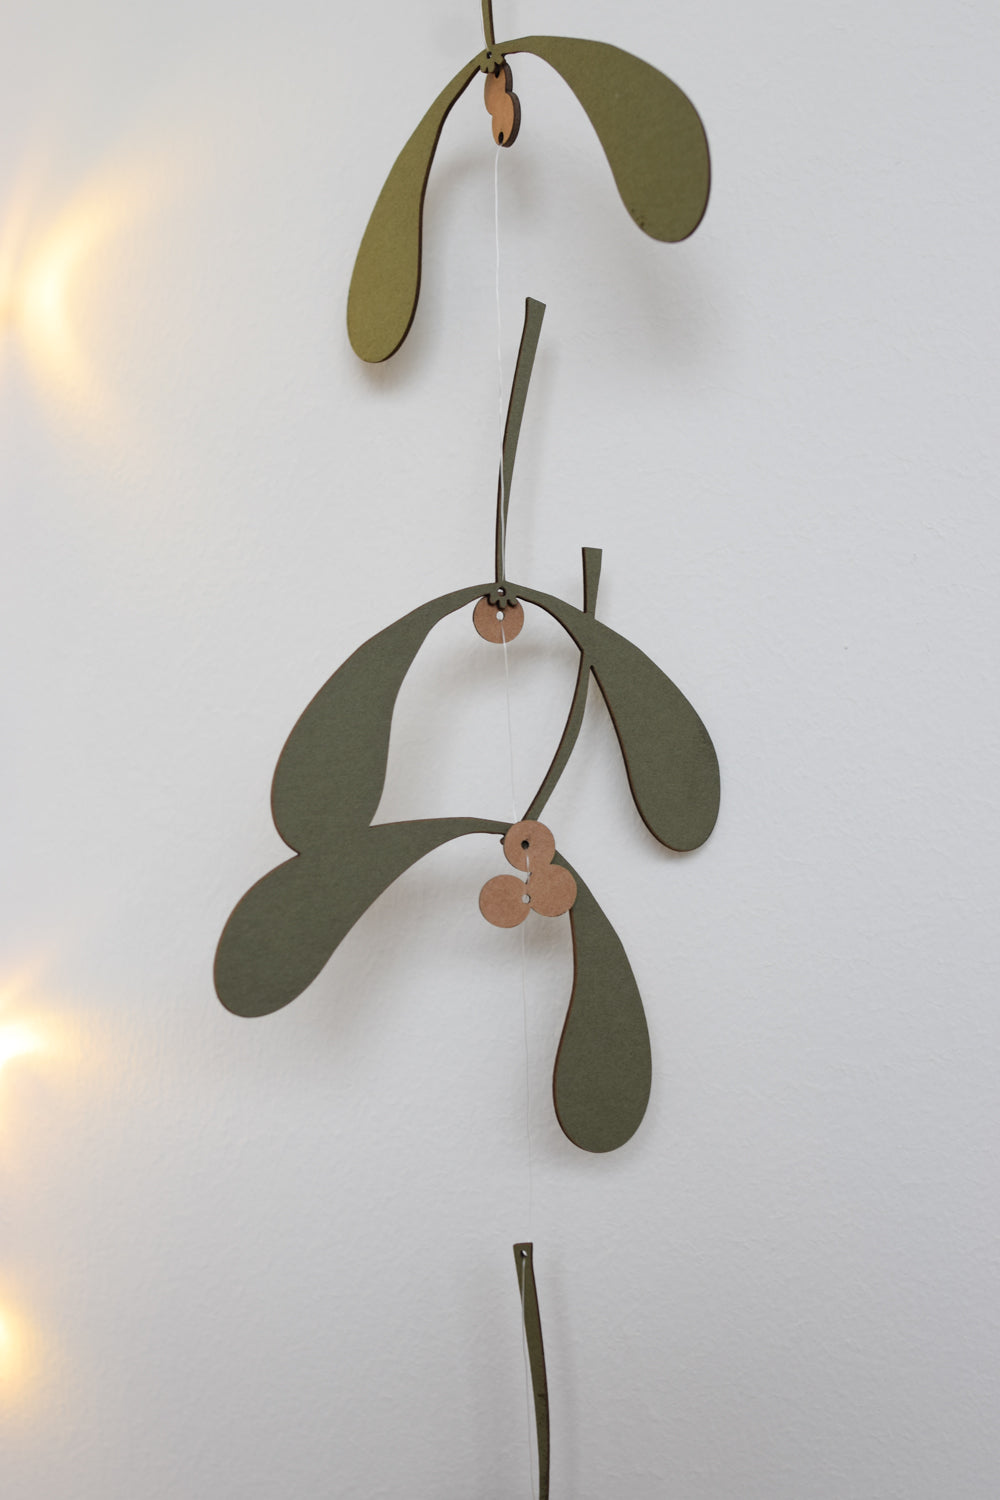 Winter treasures: Mistletoe